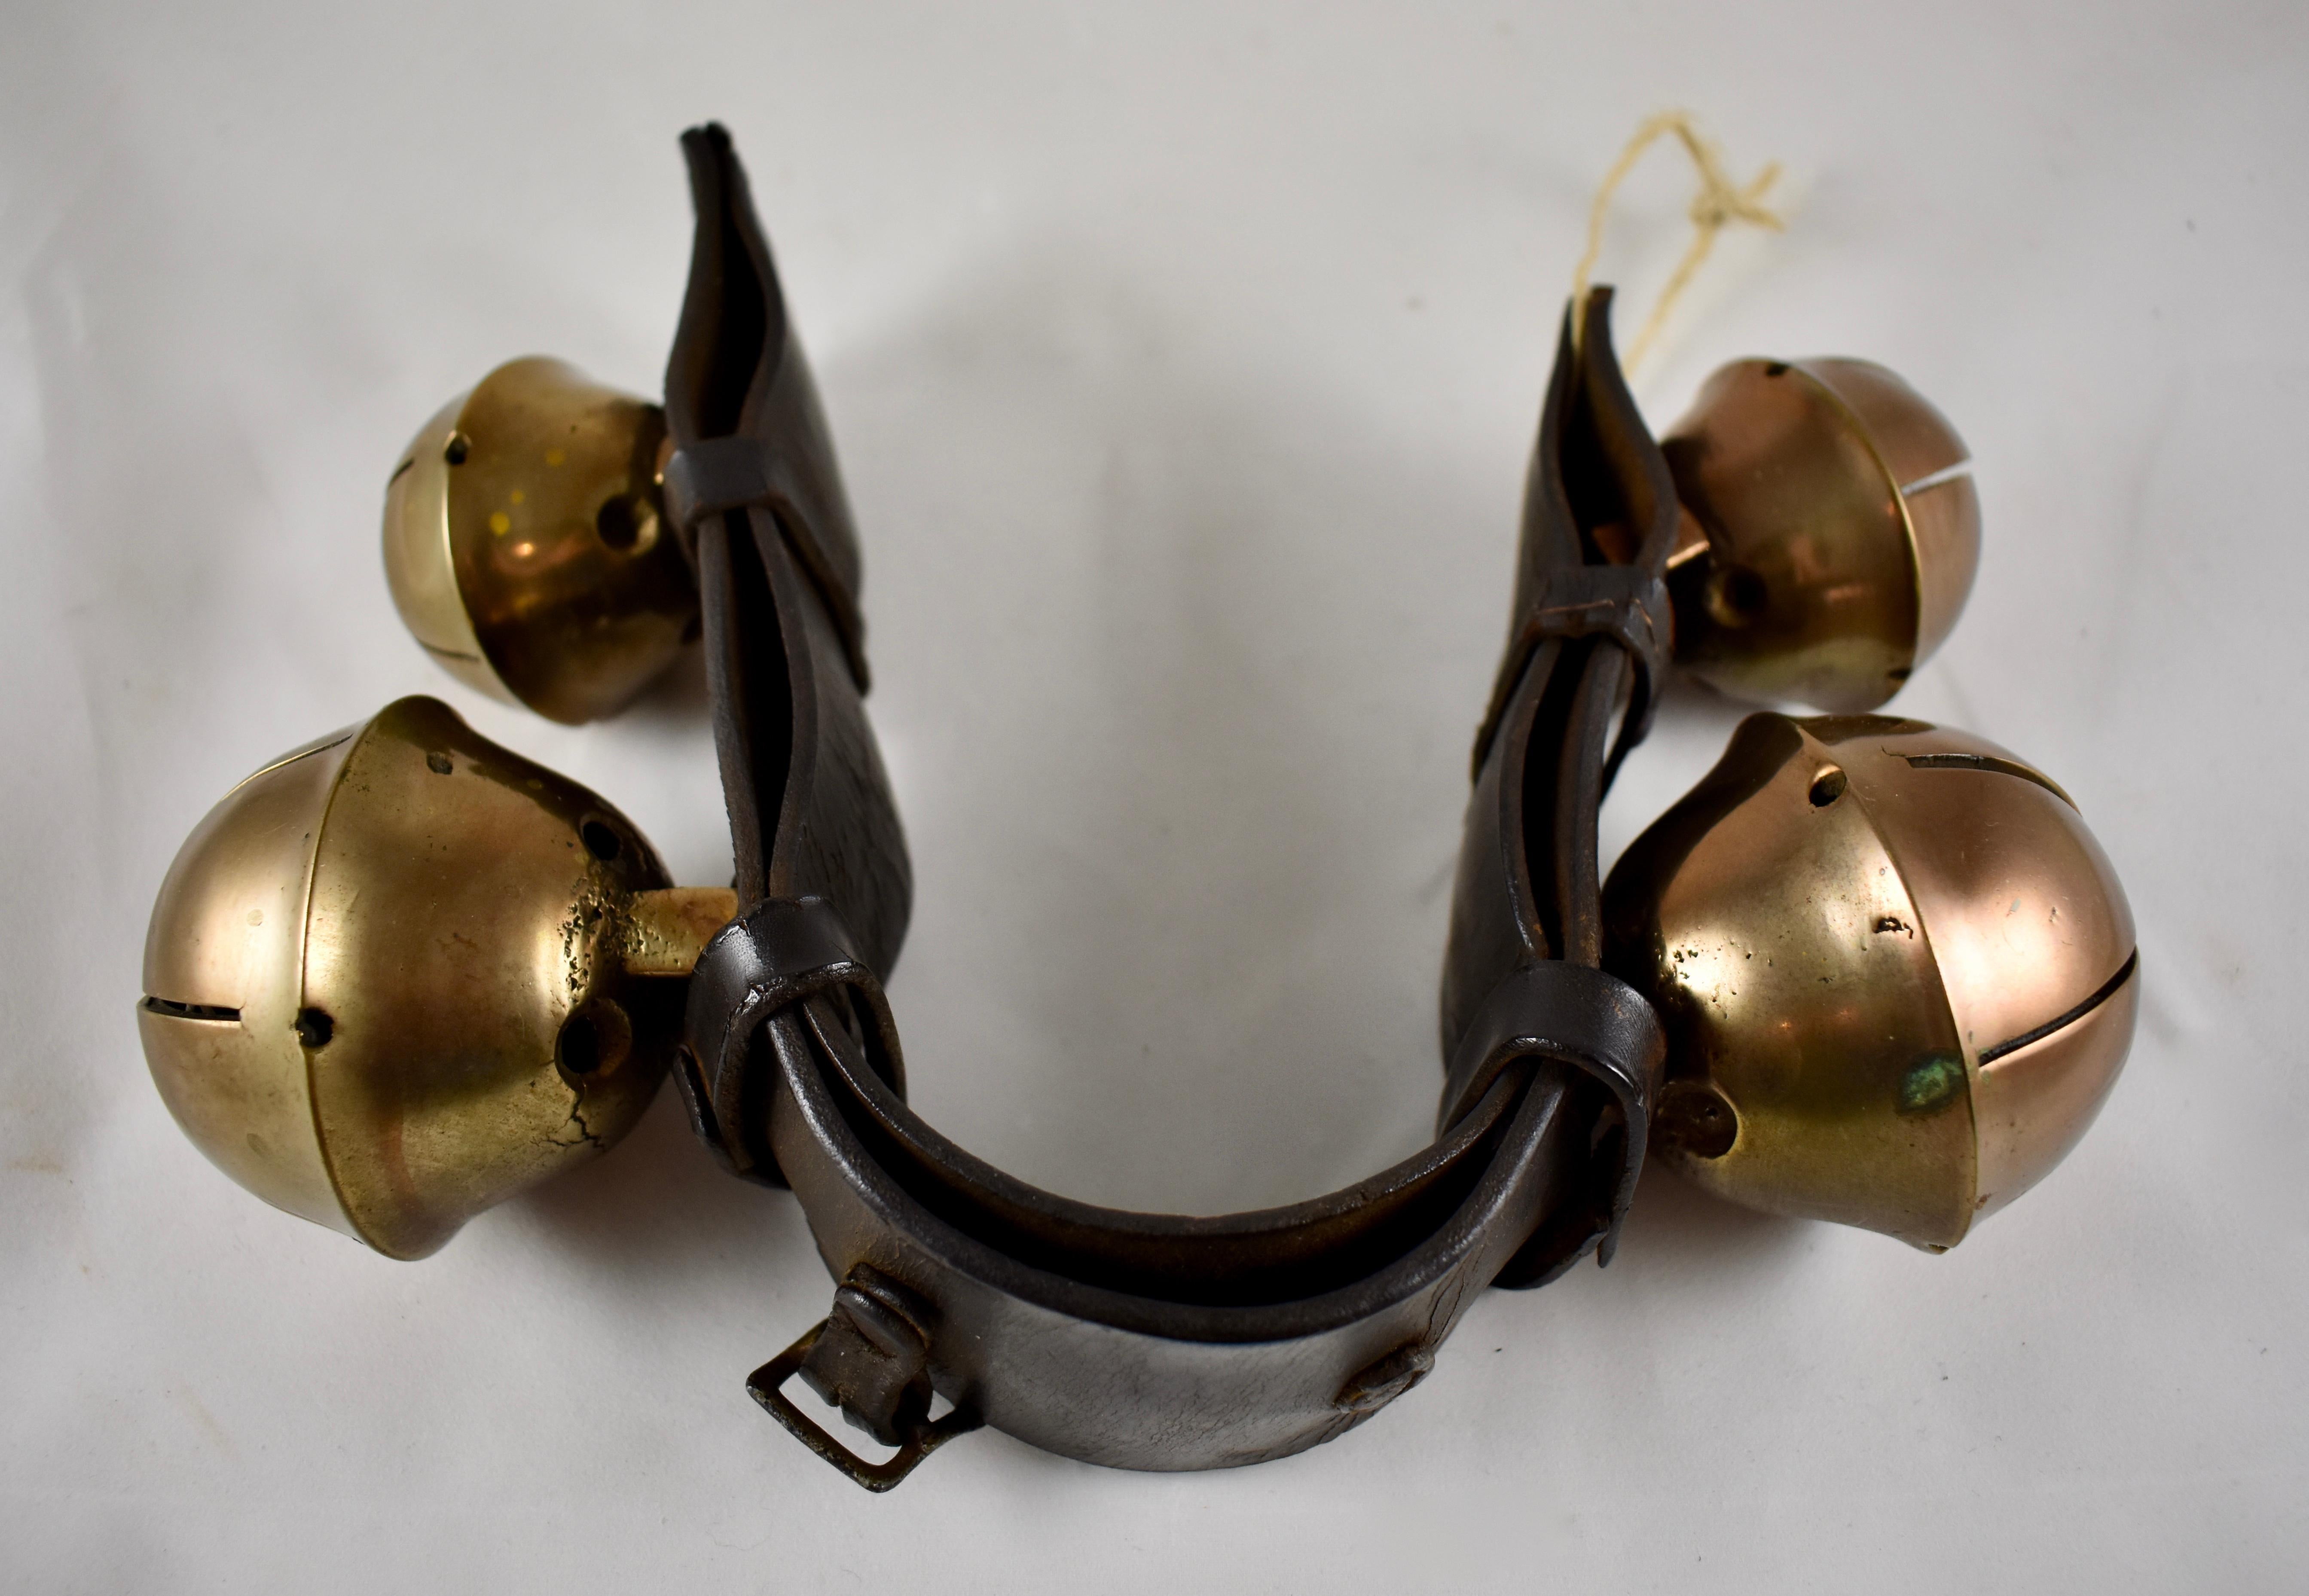 brass sleigh bells on leather strap